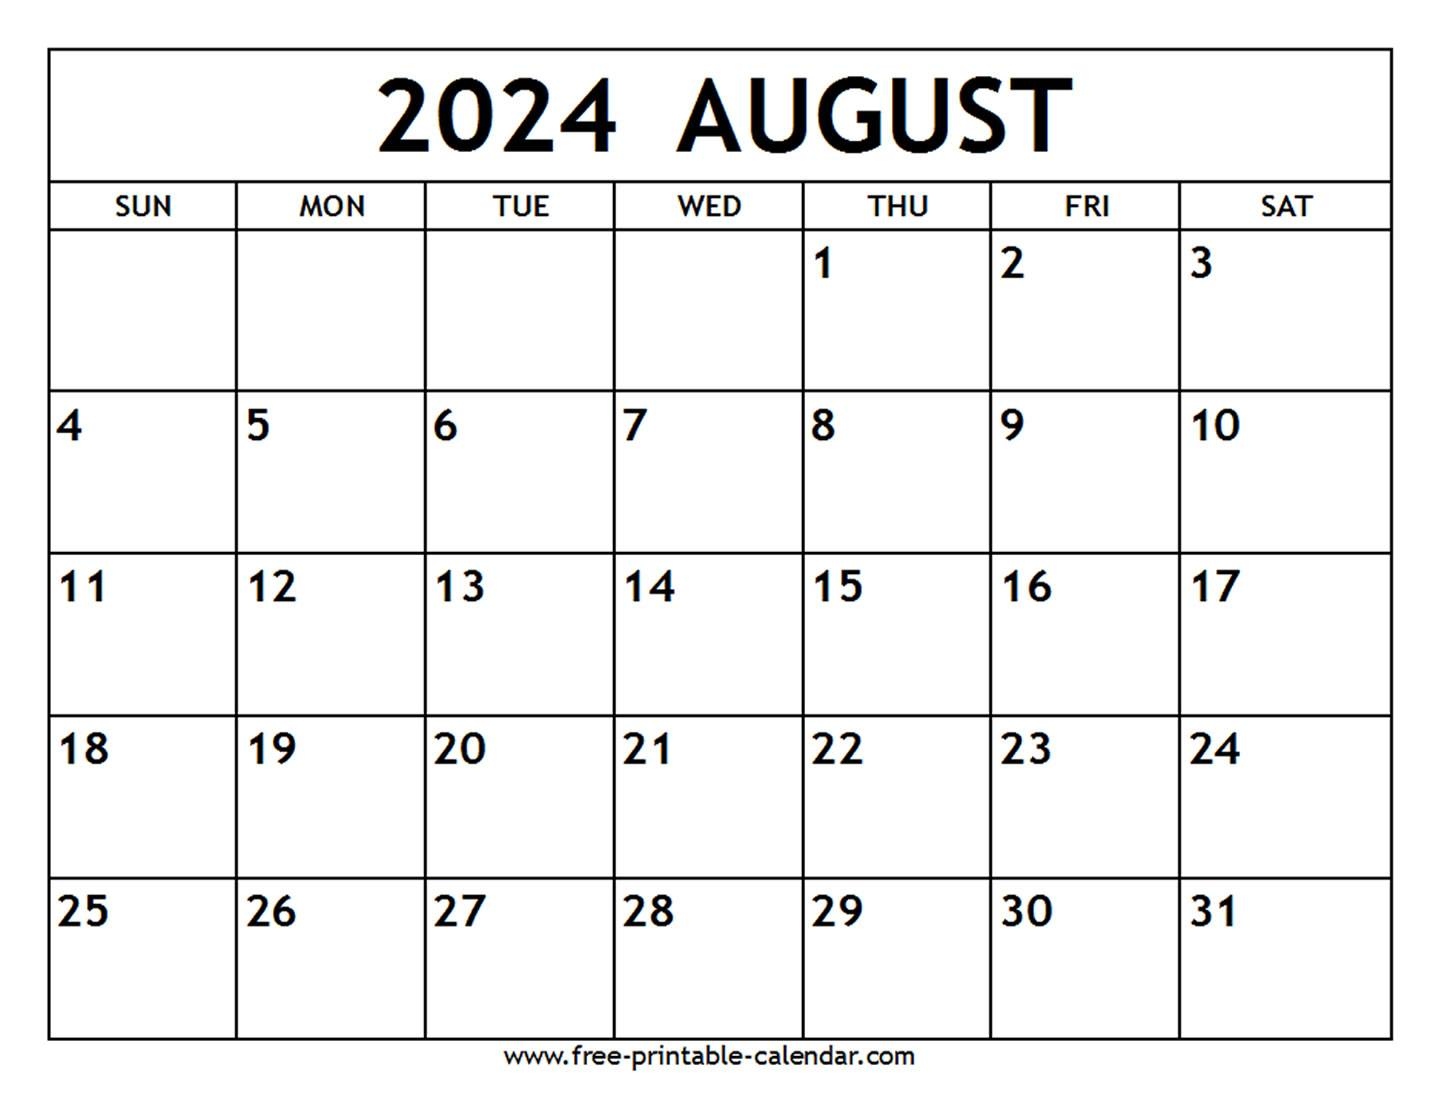 August 2024 Calendar - Free-Printable-Calendar in Free Printable Calendar August 2024